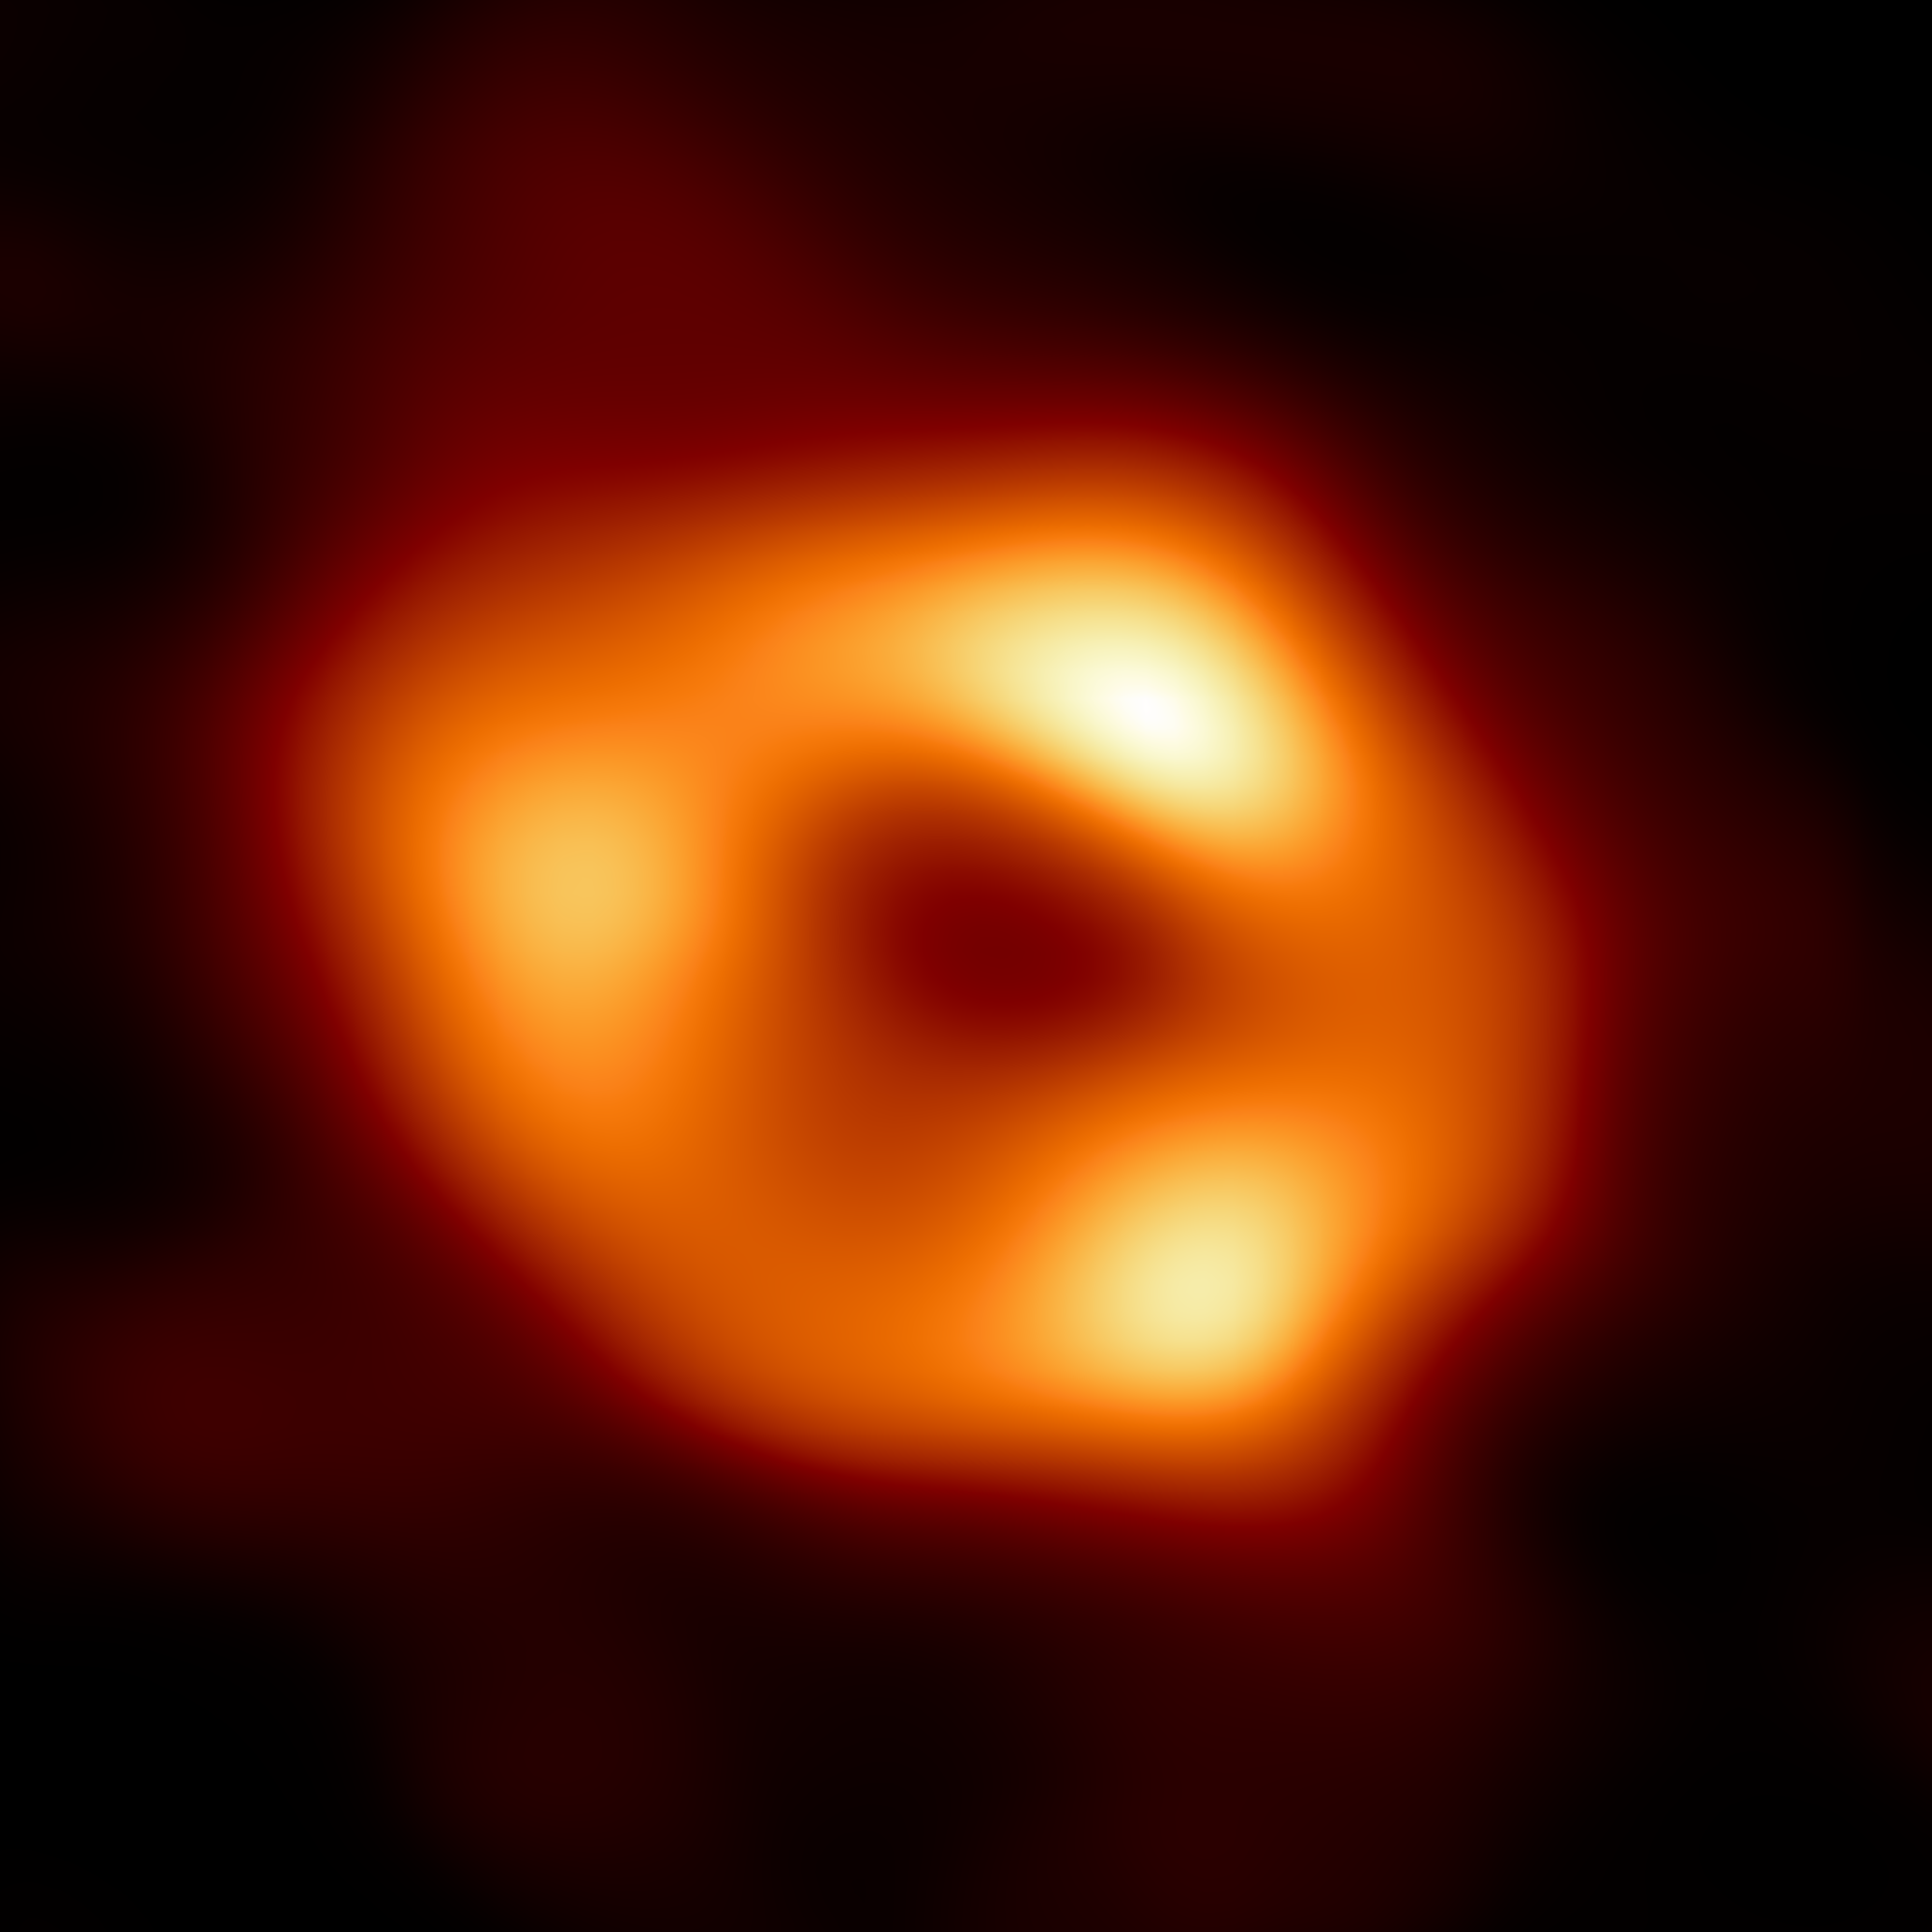 Sagittarius A * black hole